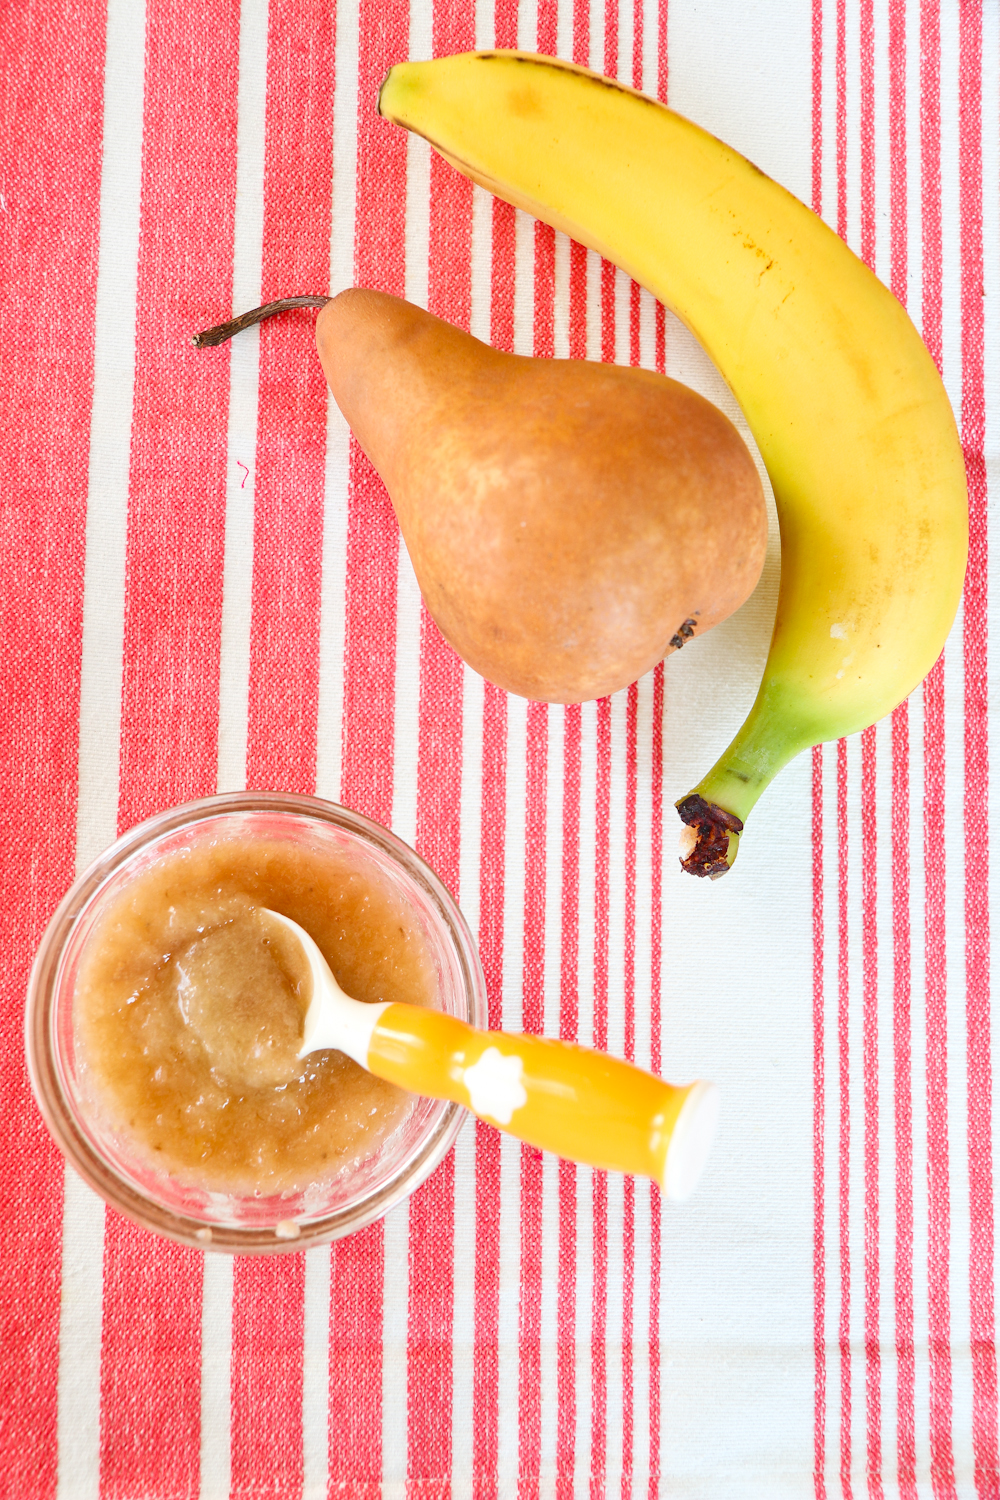 Sandy a la Mode | Baby Food - Banana Pear Puree with Blendtec